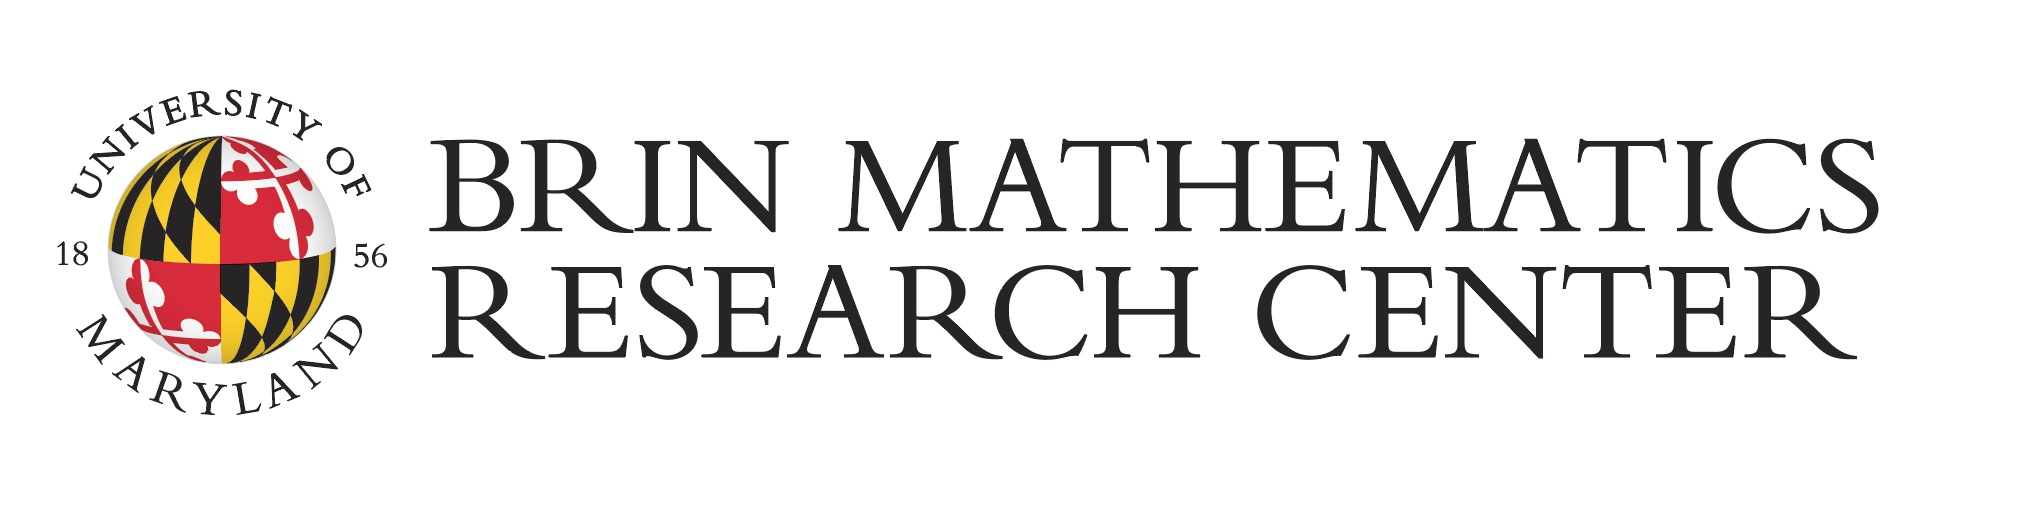 UMD Brin Mathematics Research Center